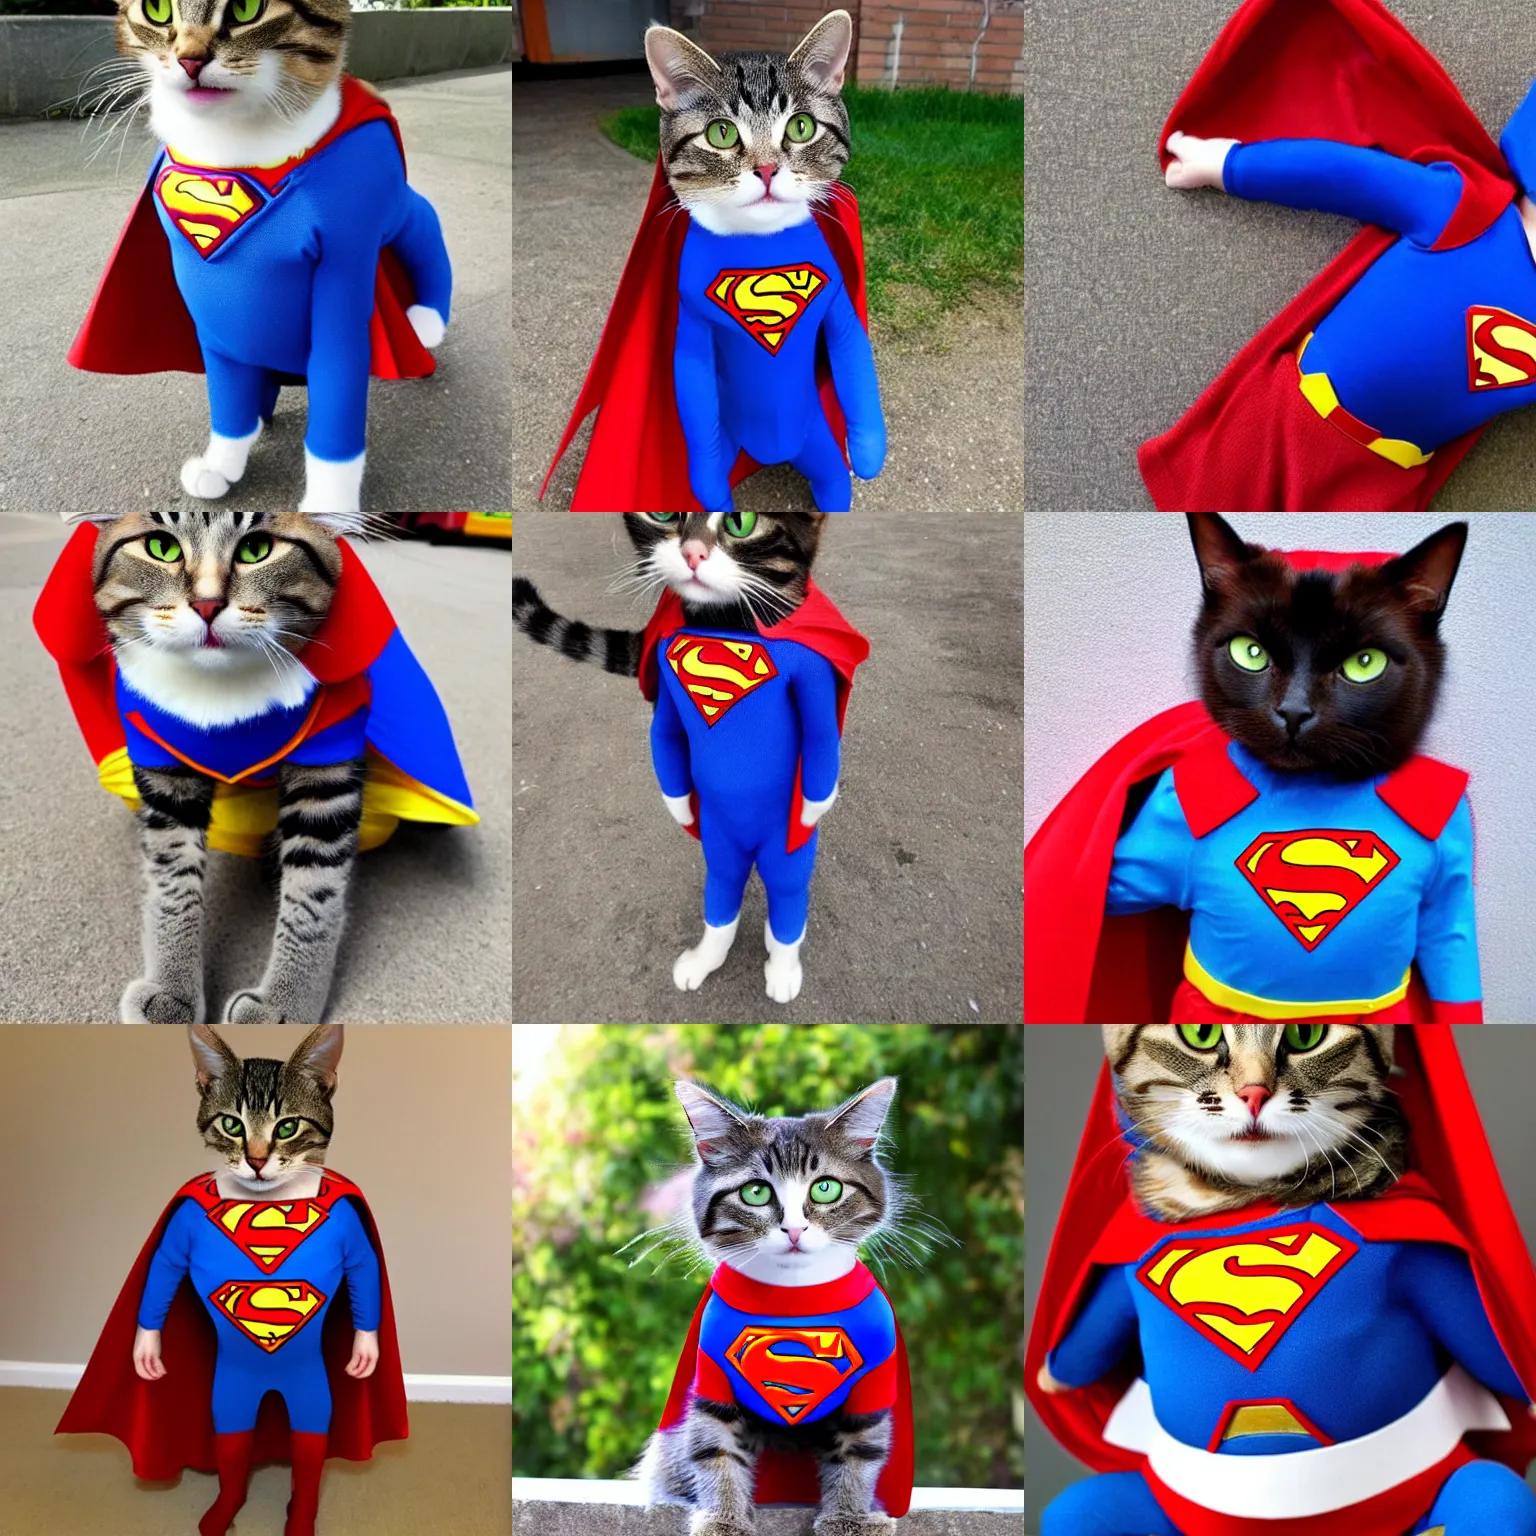 Prompt: cat dressed as superman